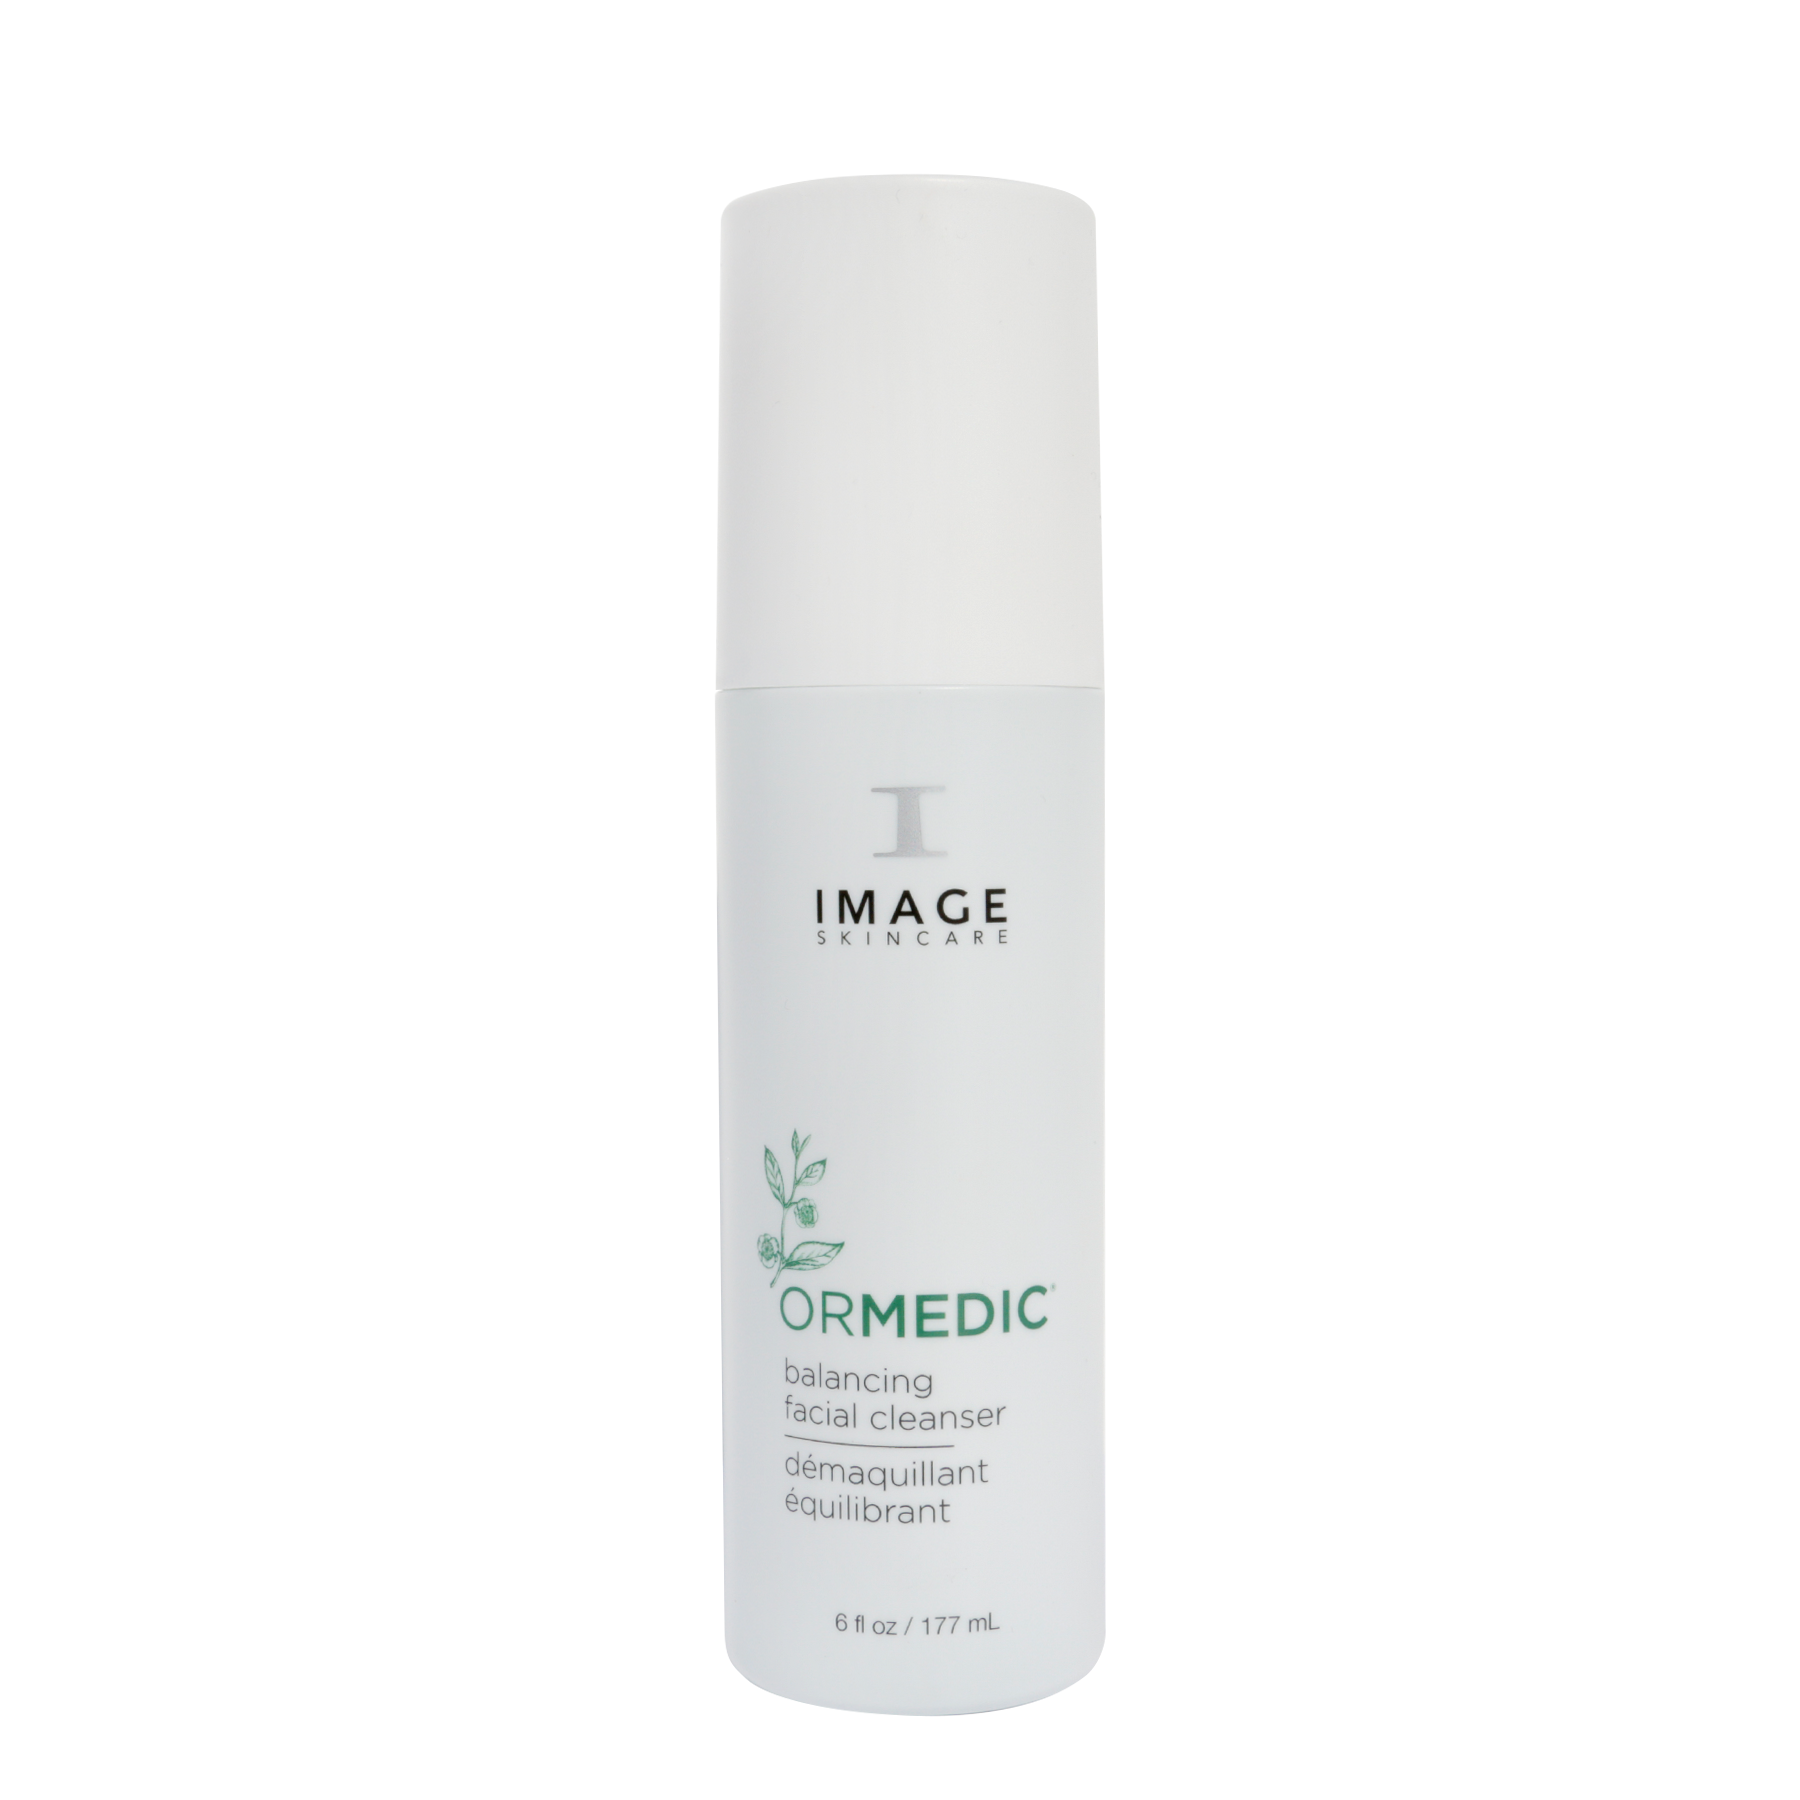 ORMEDIC® balancing facial cleanser